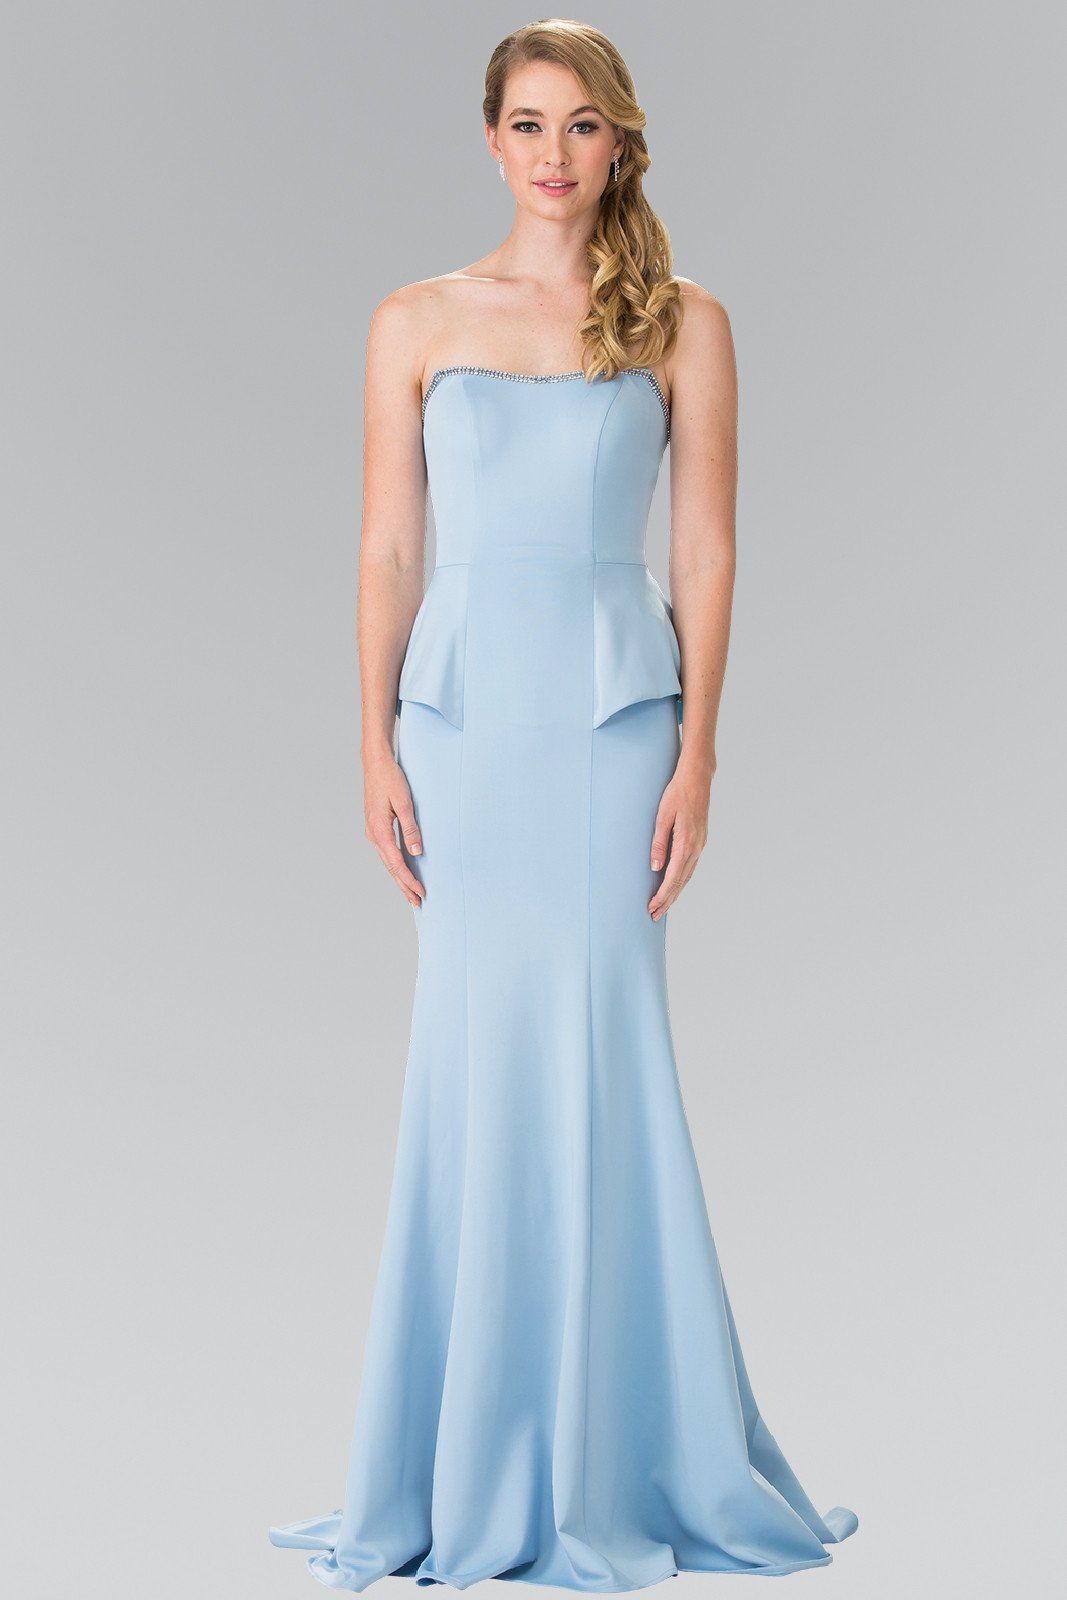 Long Strapless Mermaid Dress by Elizabeth K GL2304-Long Formal Dresses-ABC Fashion